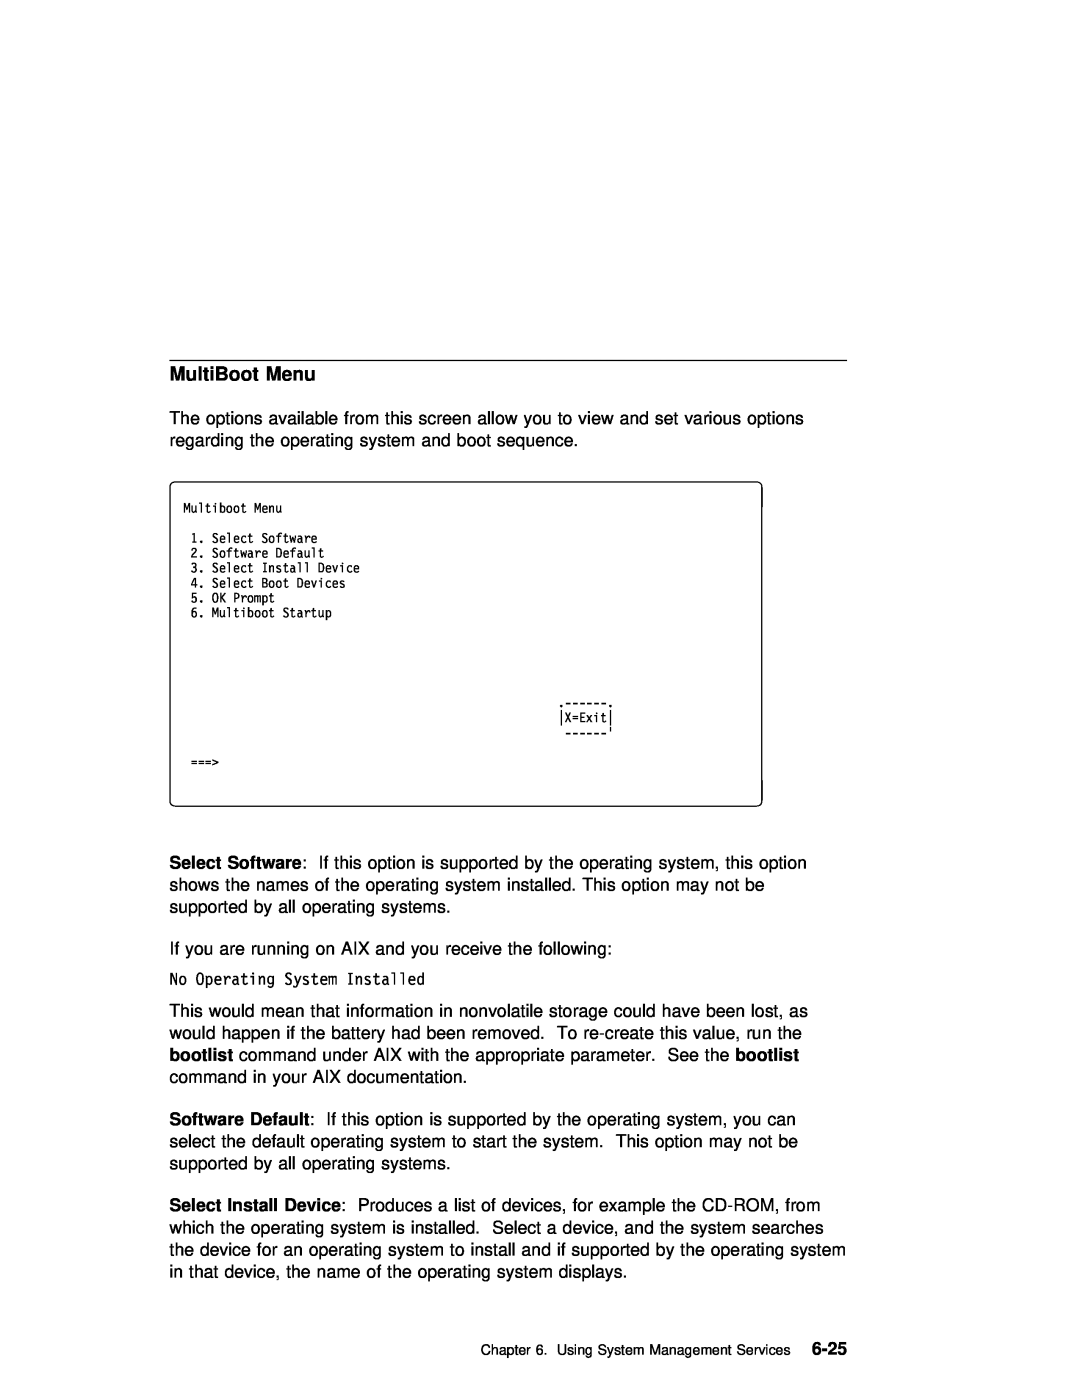 IBM B50 manual MultiBoot Menu, No Operating System Installed, 6-25 